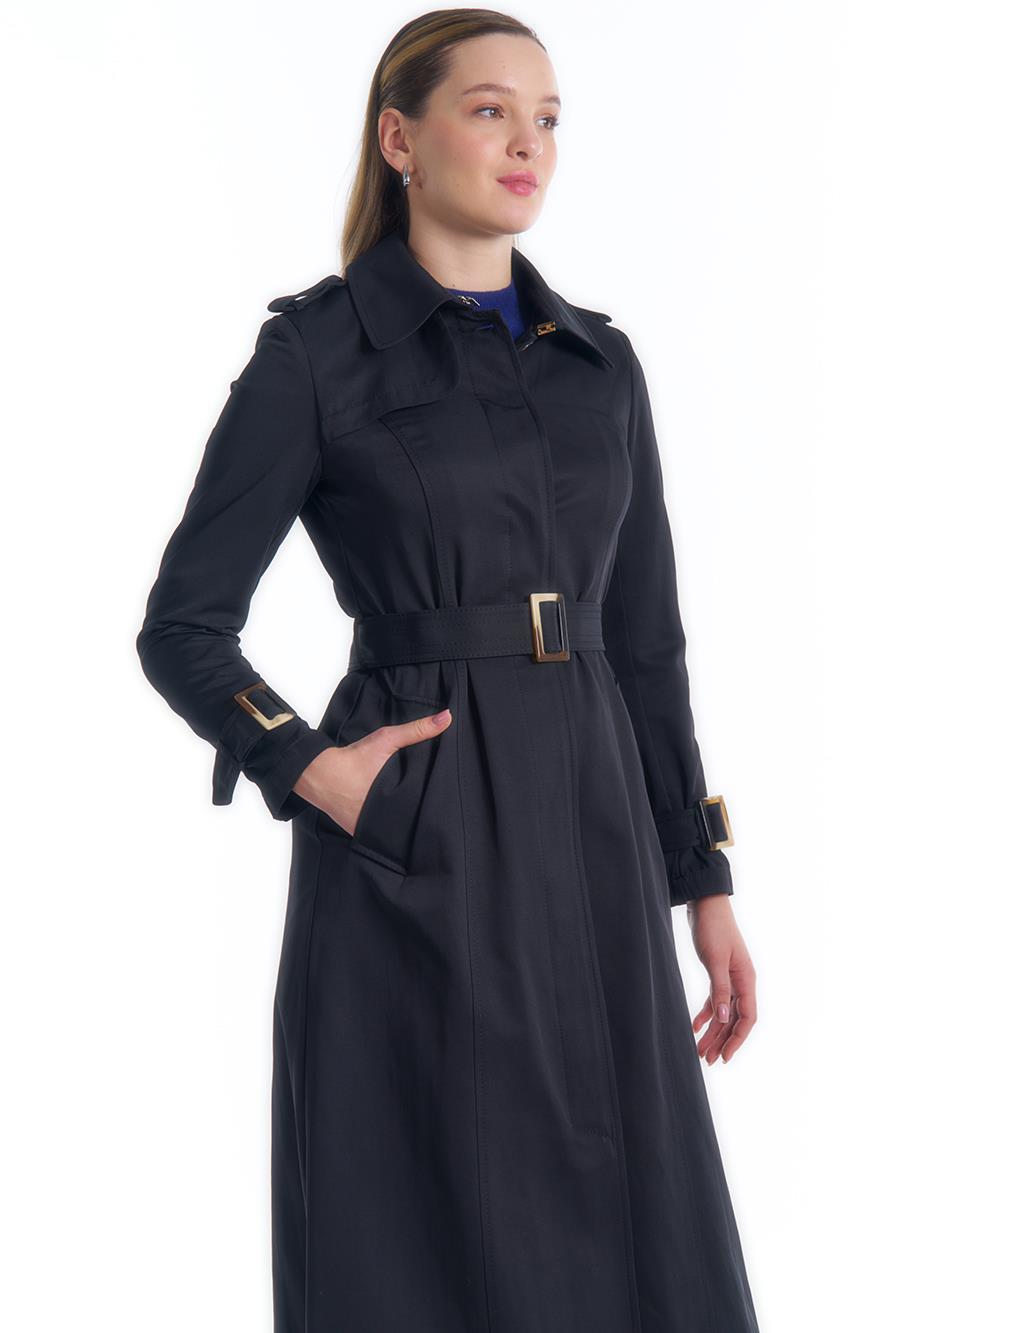 Epaulette Detailed Belted Top Coat Black